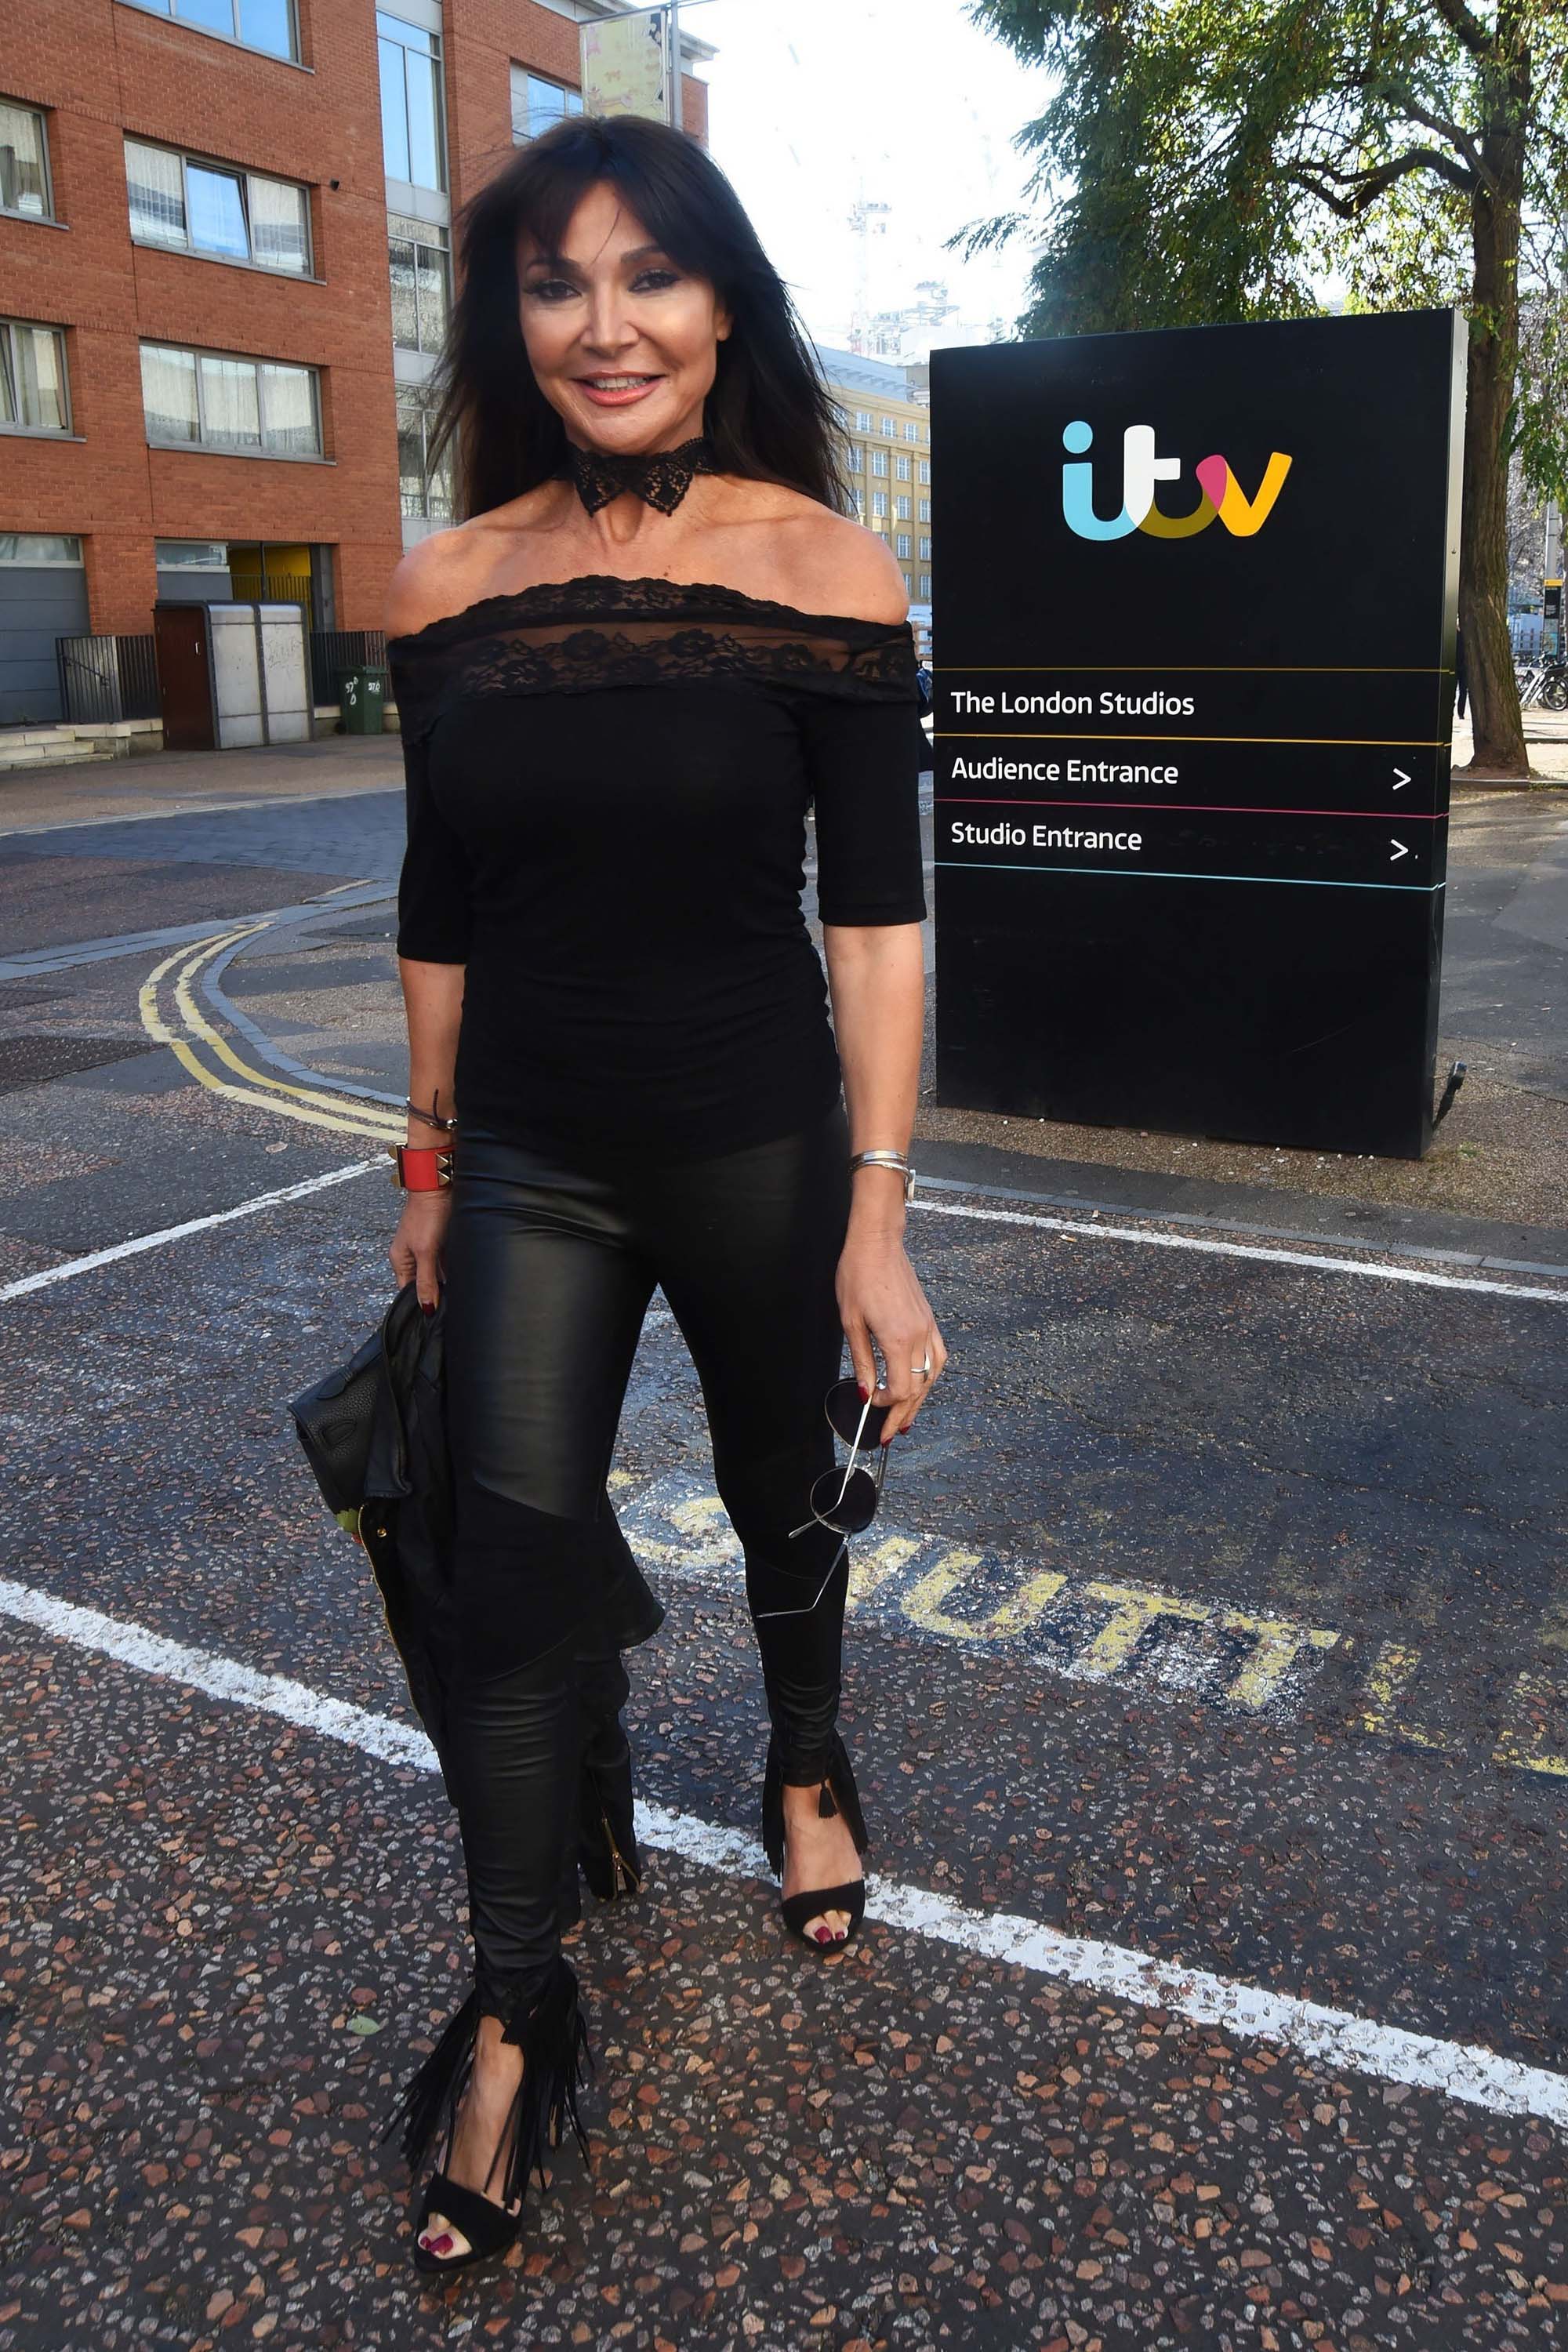 Lizzie Cundy at ITV Studio headquarters